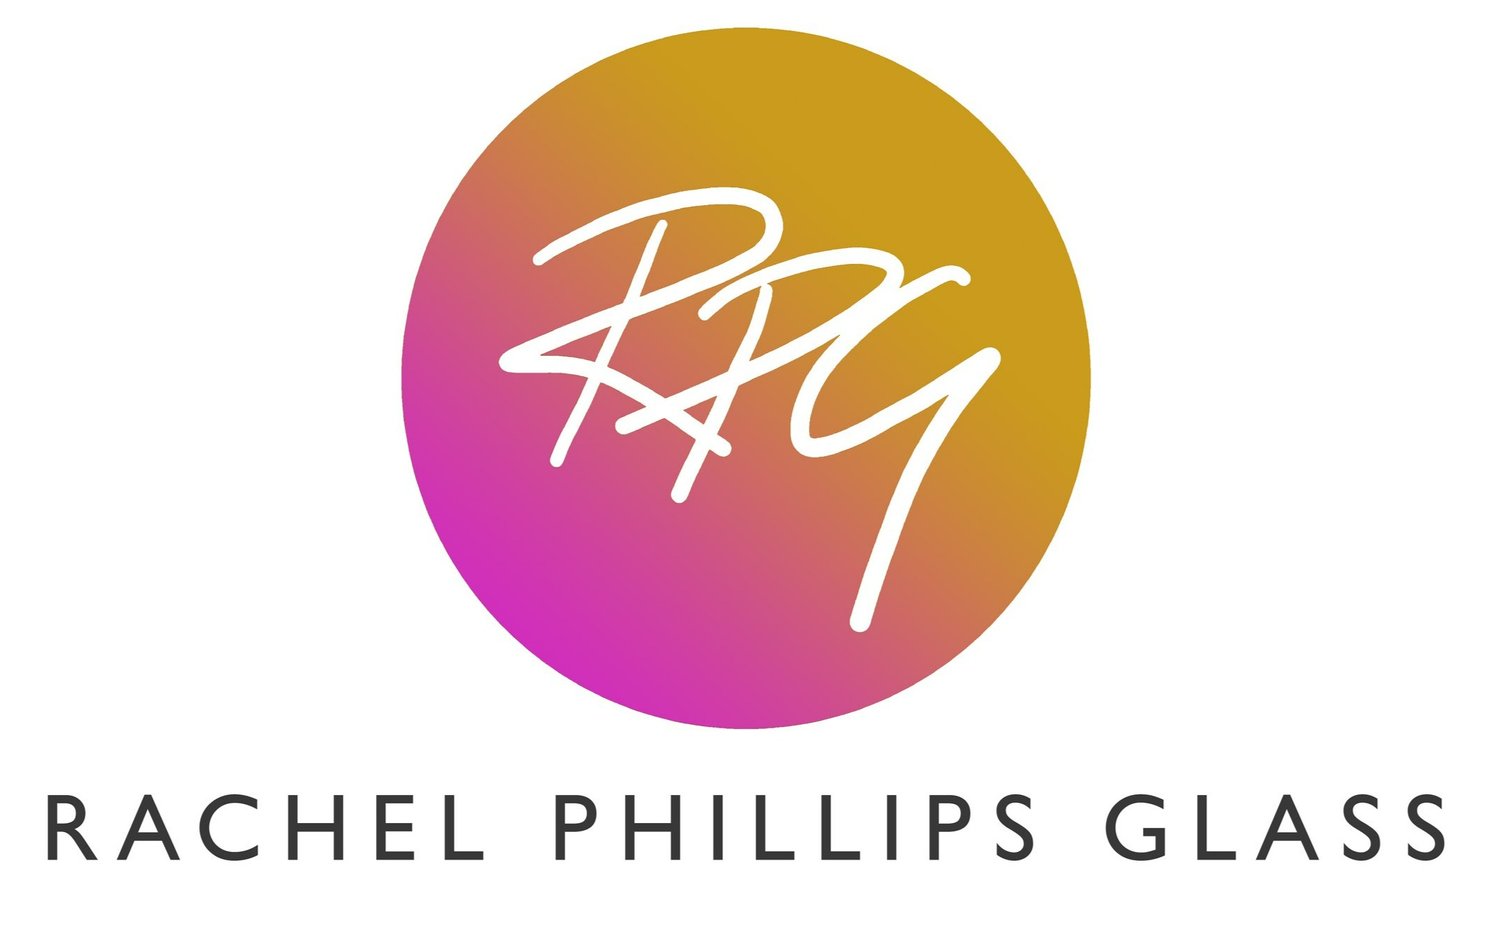 Rachel Phillips Glass